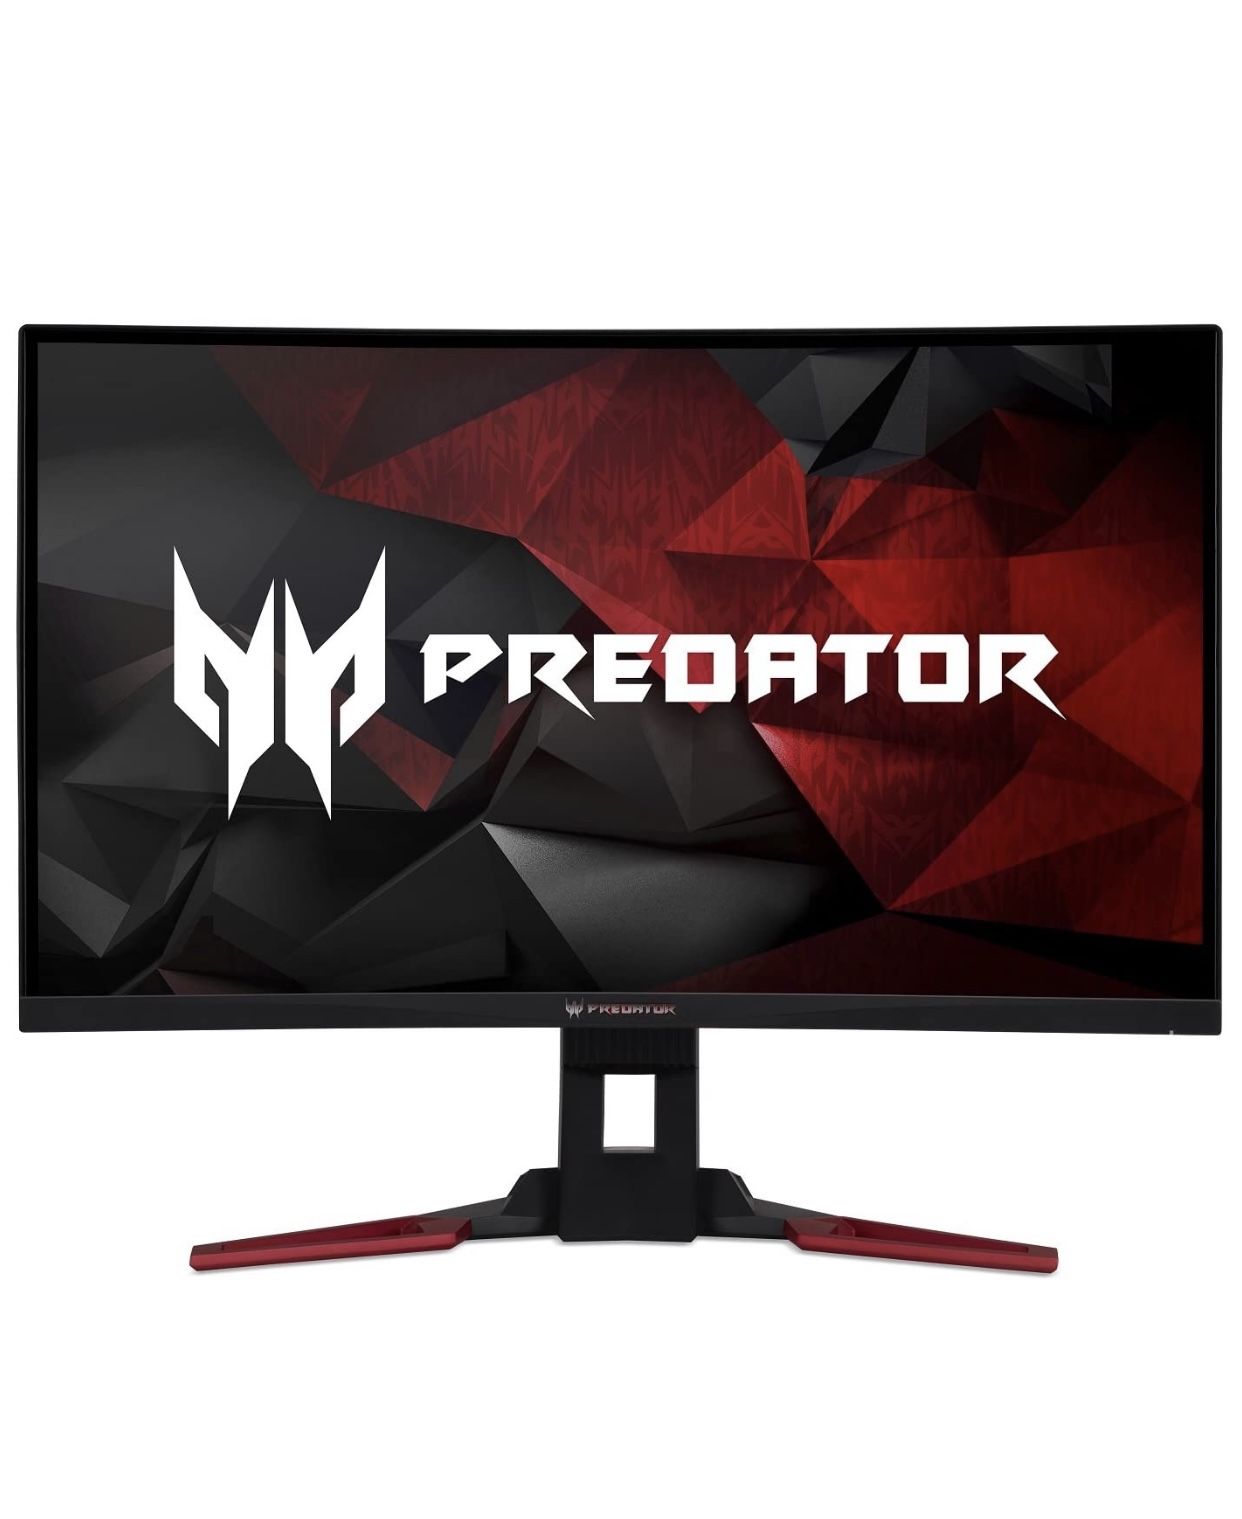 Acer Predator Curved Gaming Monitor - OBO